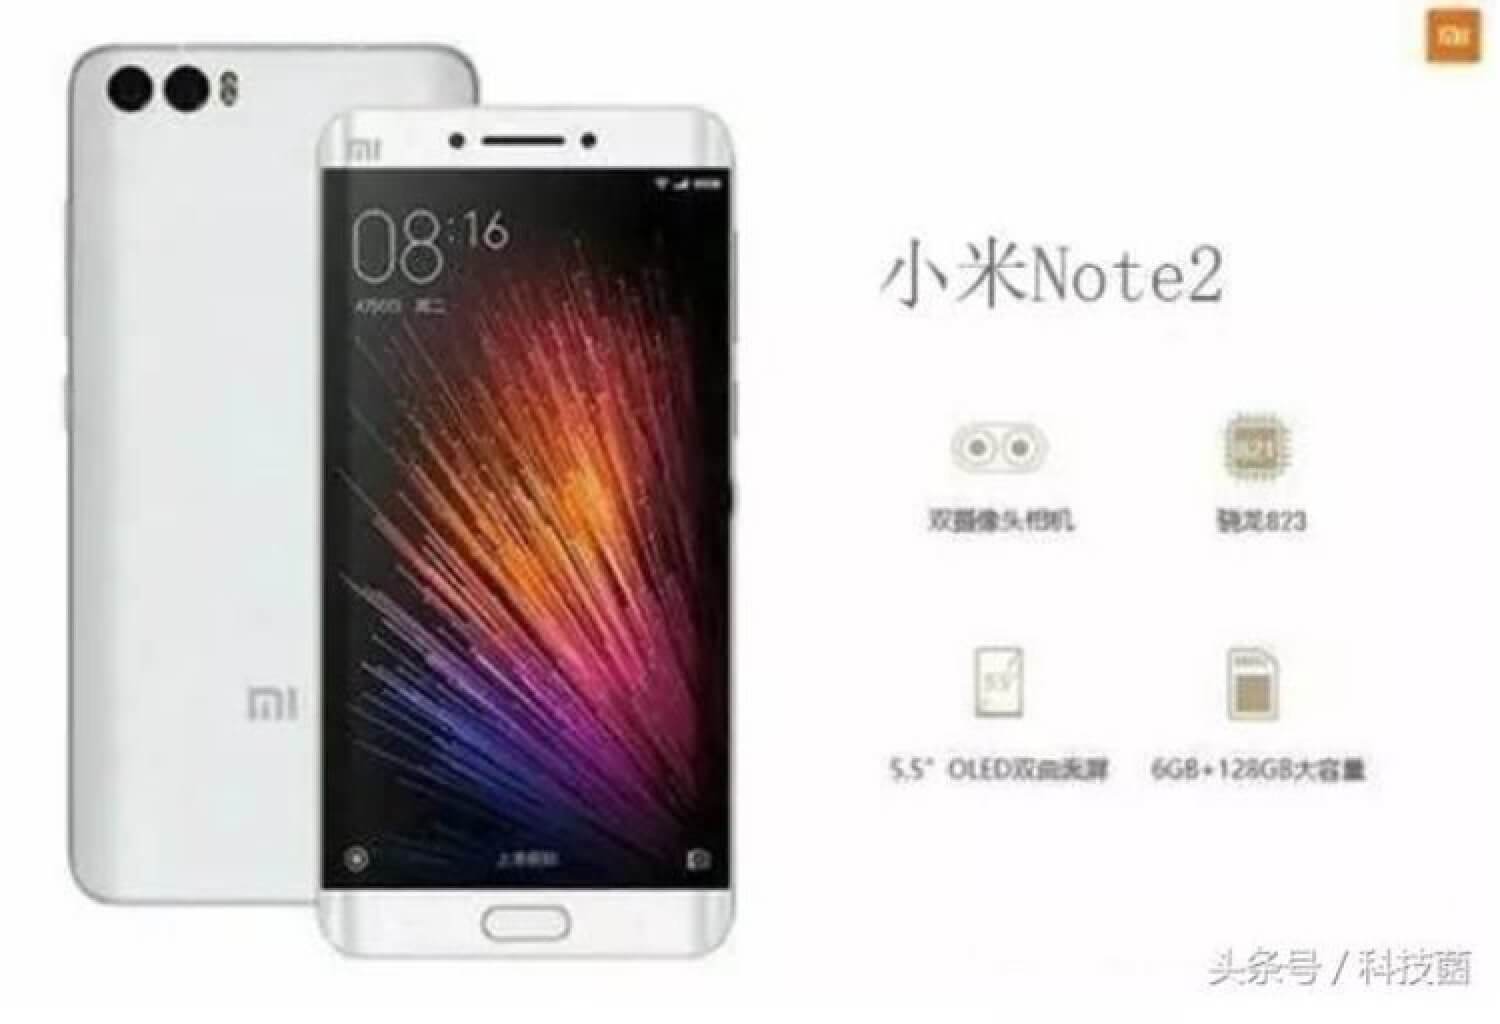 Предположительно Xiaomi Mi Note 2